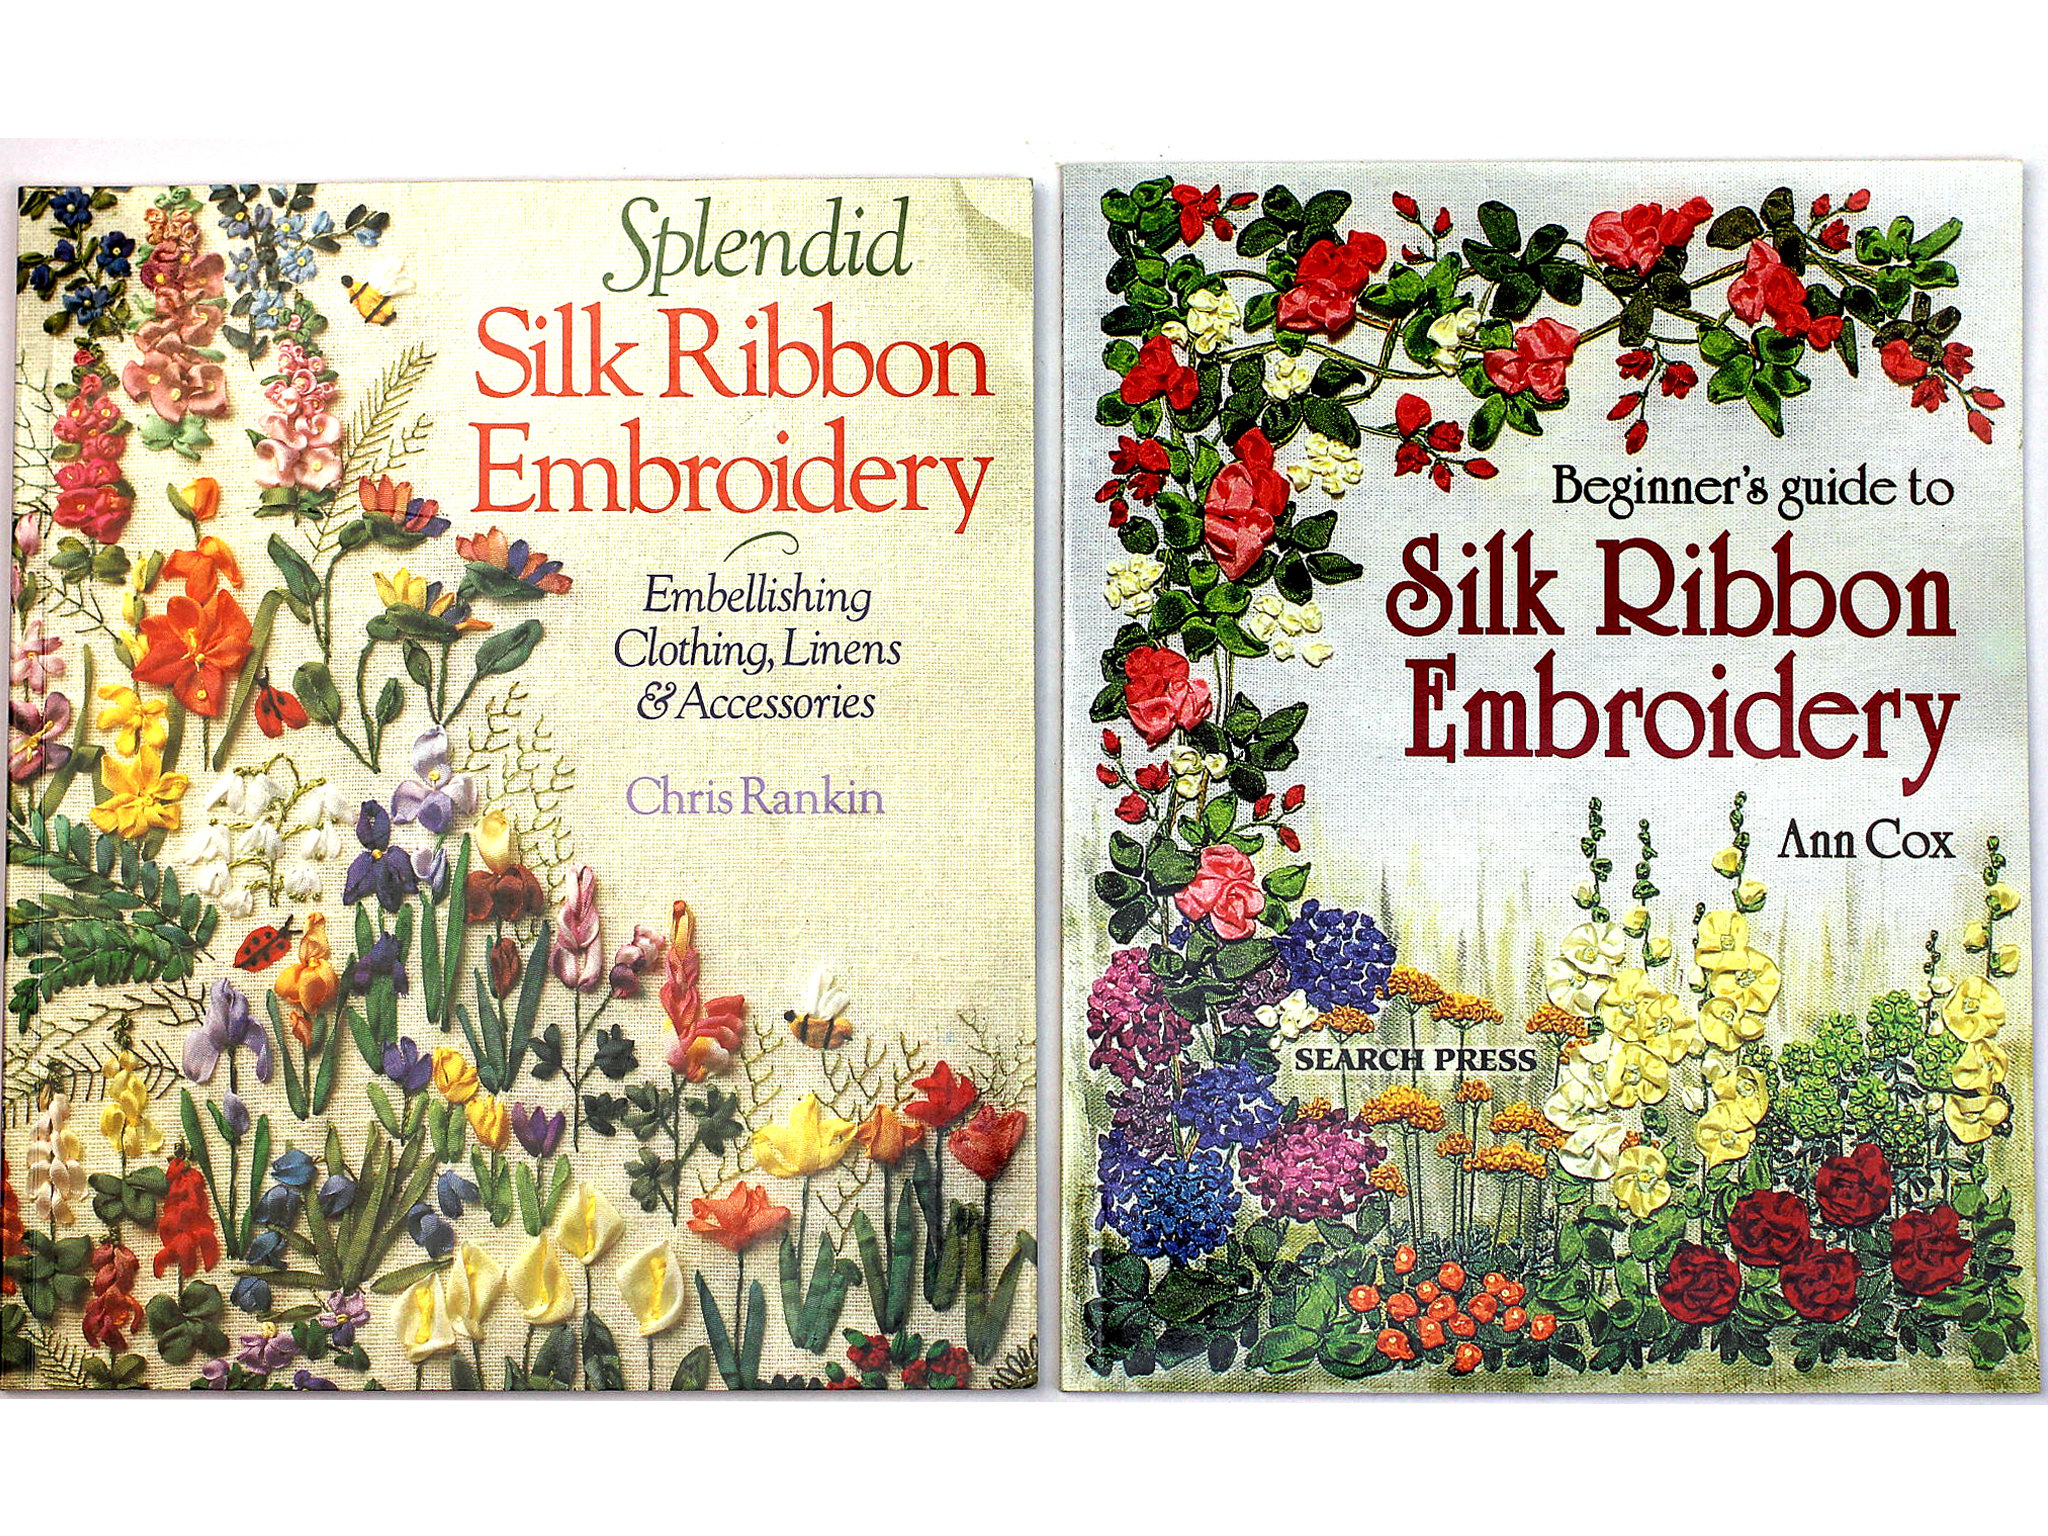 Silk Ribbon Embroidery Patterns Splendid Silk Ribbon Embroidery Beginners Guide To Silk Ribbon Embroidery Ann Cox Chris Rankin Embroidery Books Embroidery Patterns